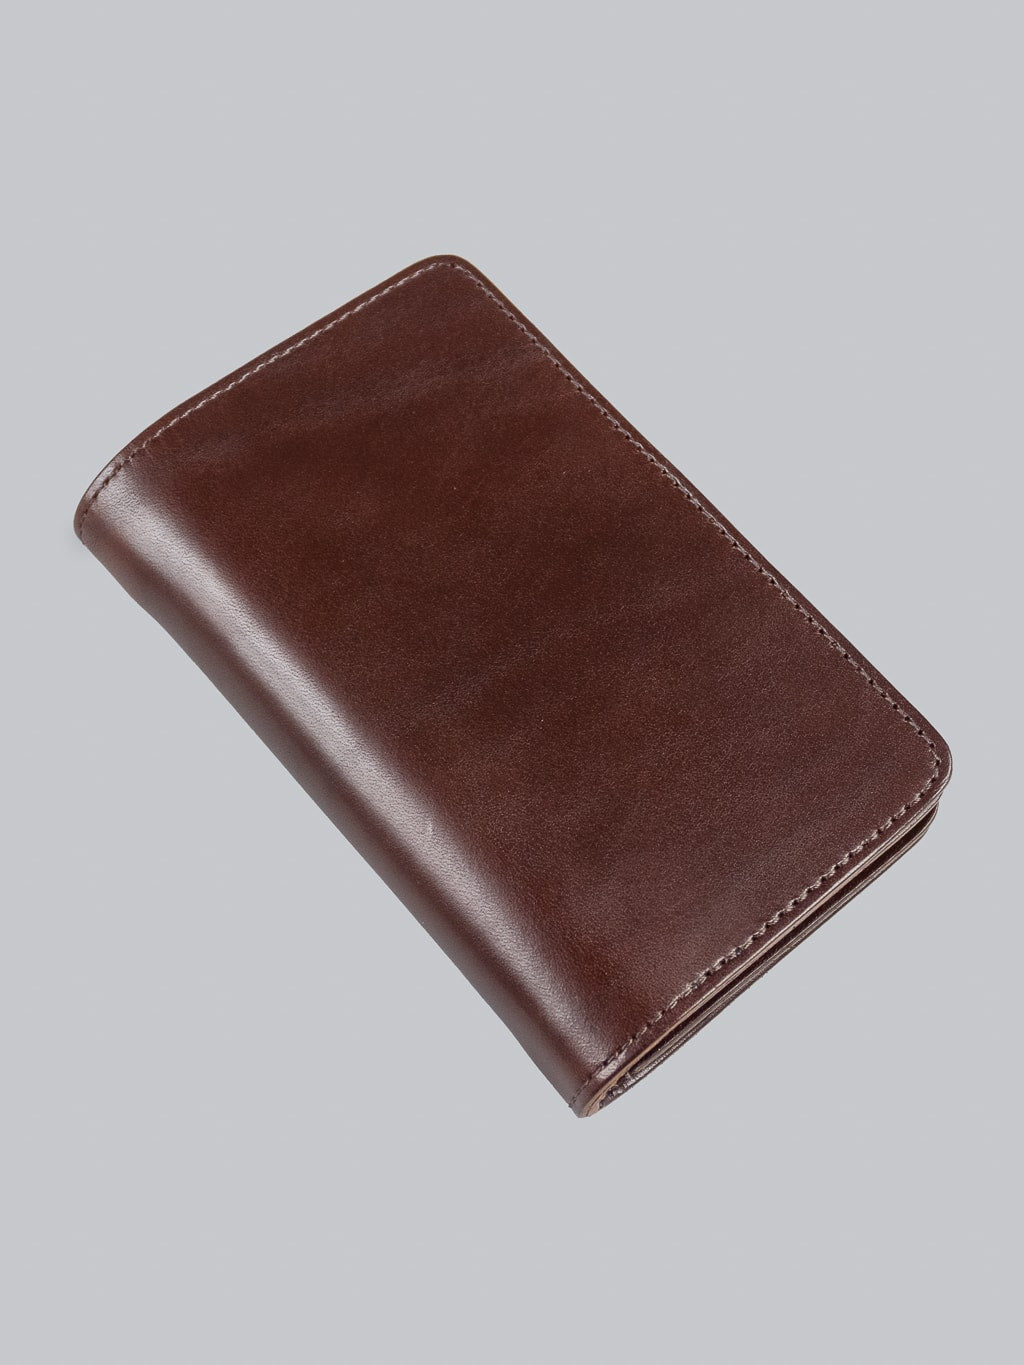 Kobashi Studio middle wallet leather brown